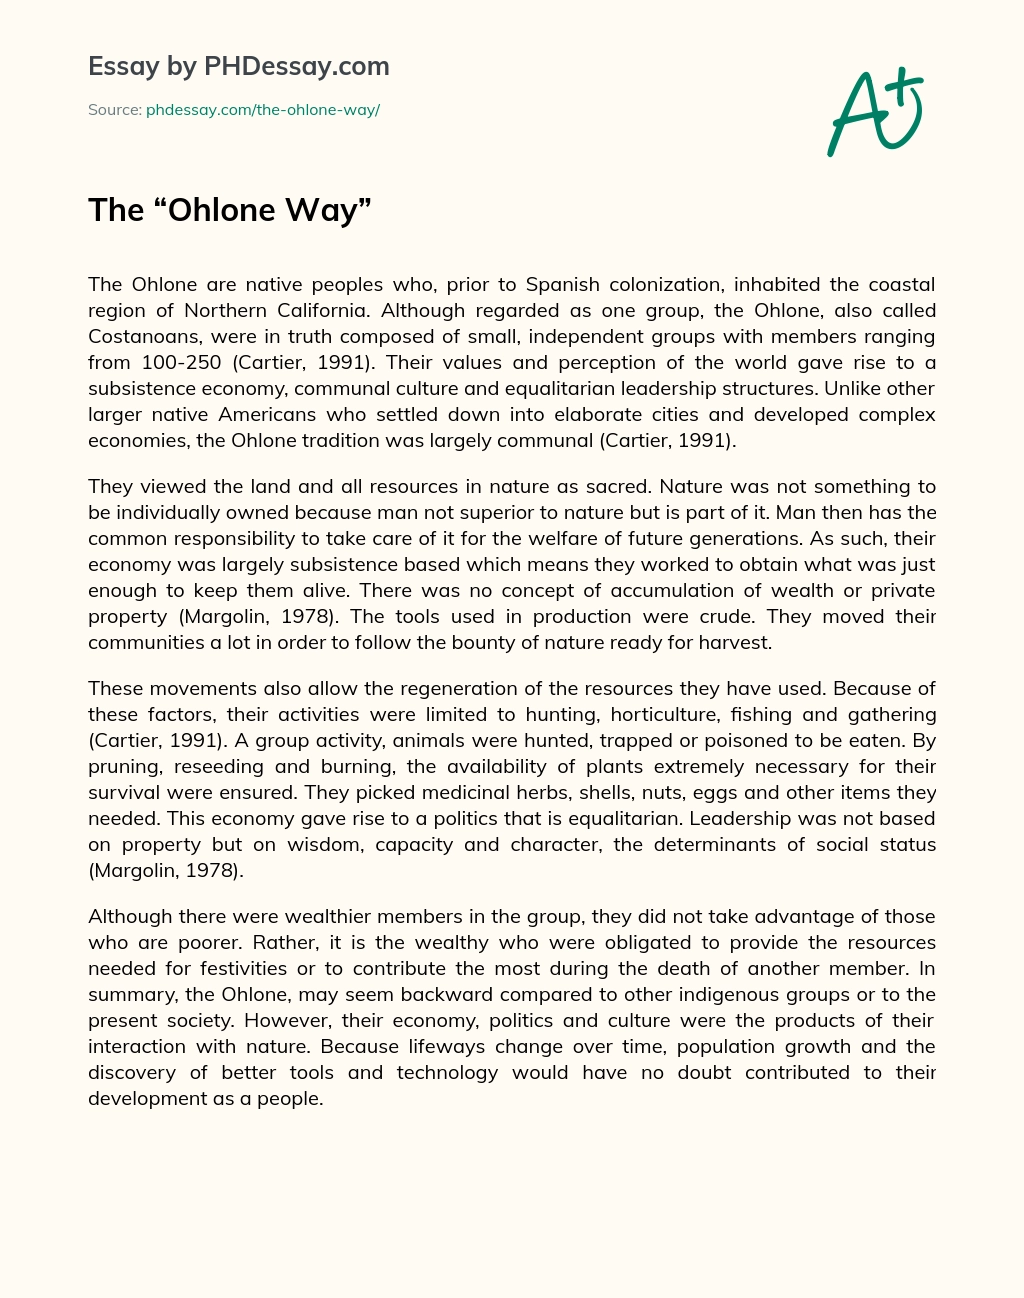 The “Ohlone Way” essay